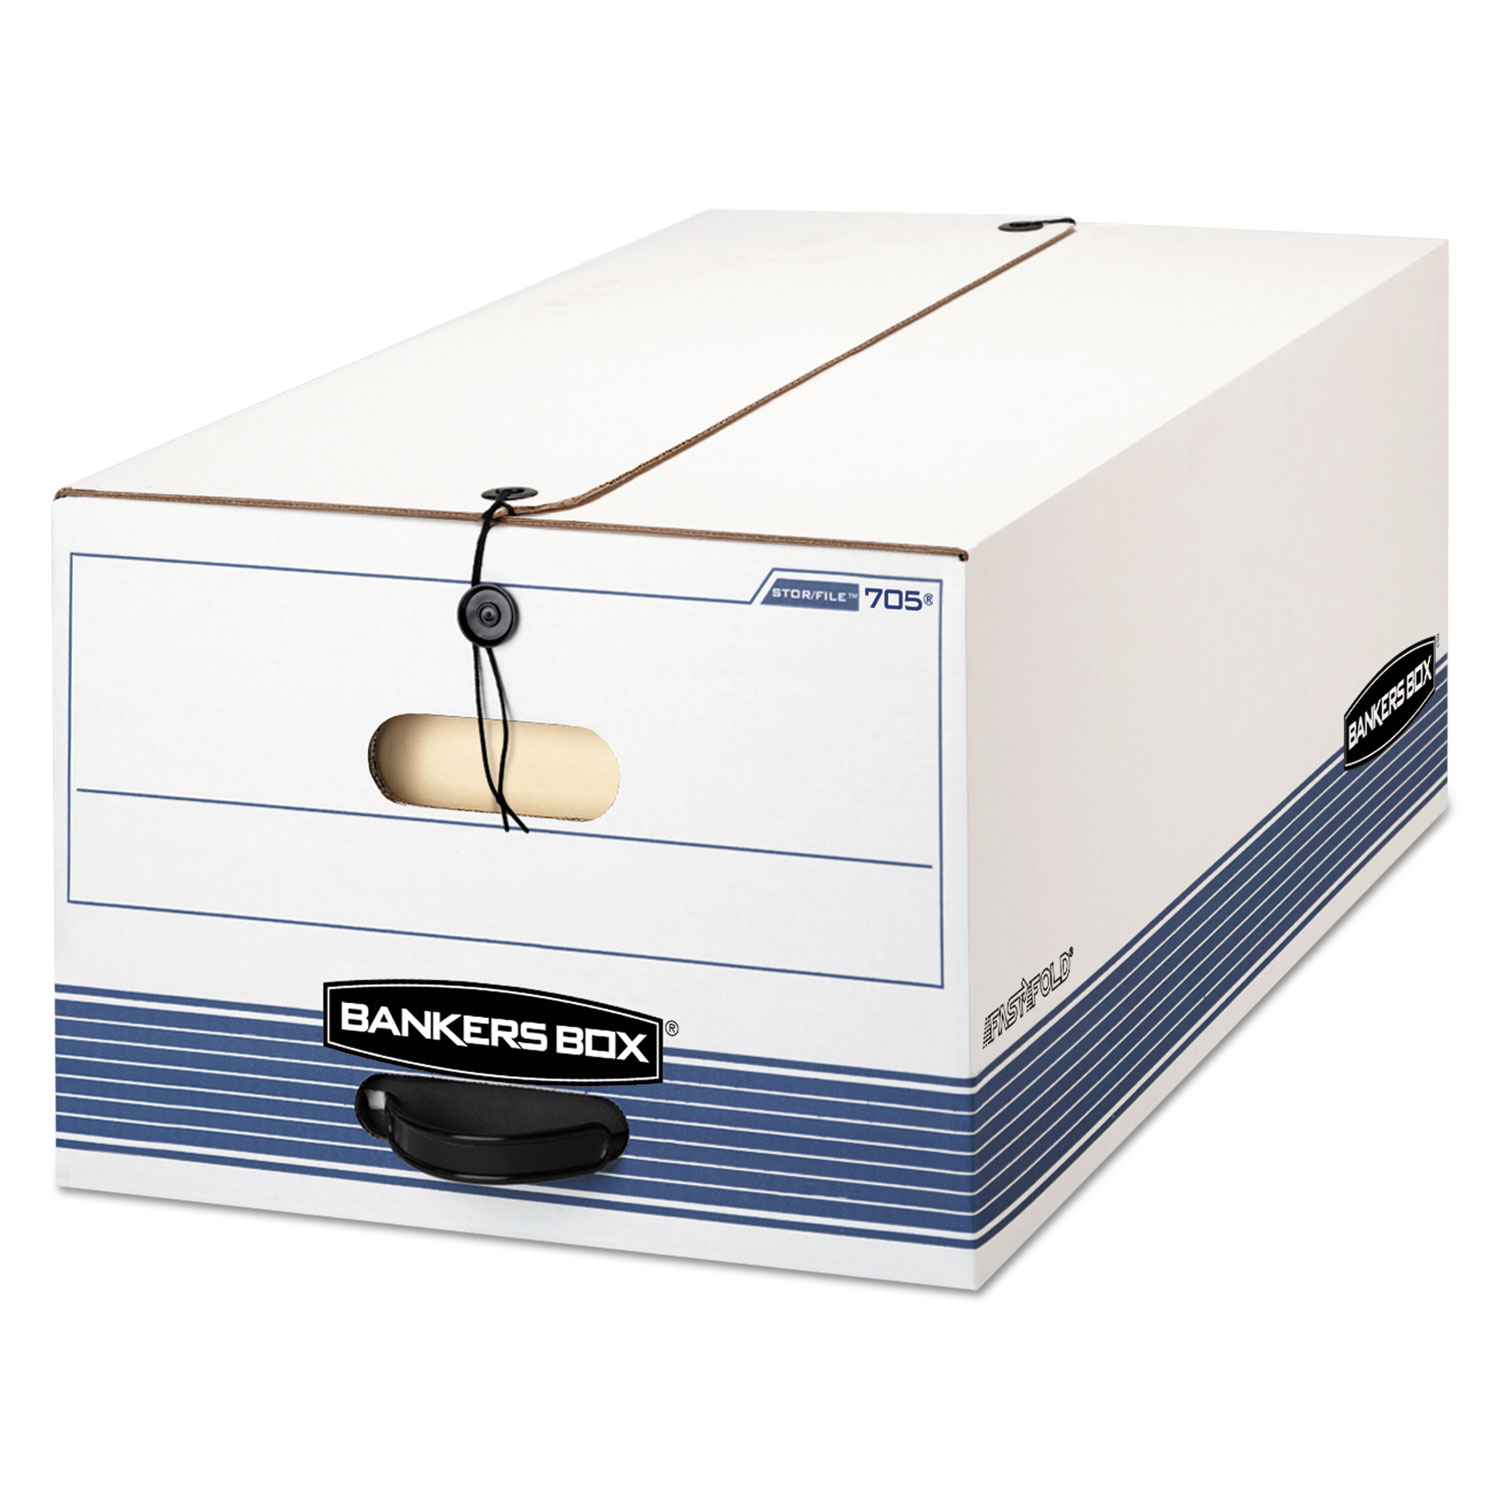  Bankers Box 0070503 STOR/FILE Medium-Duty Strength Storage Boxes, Legal Files, 15.25 x 19.75 x 10.75, White/Blue, 4/Carton (FEL0070503) 